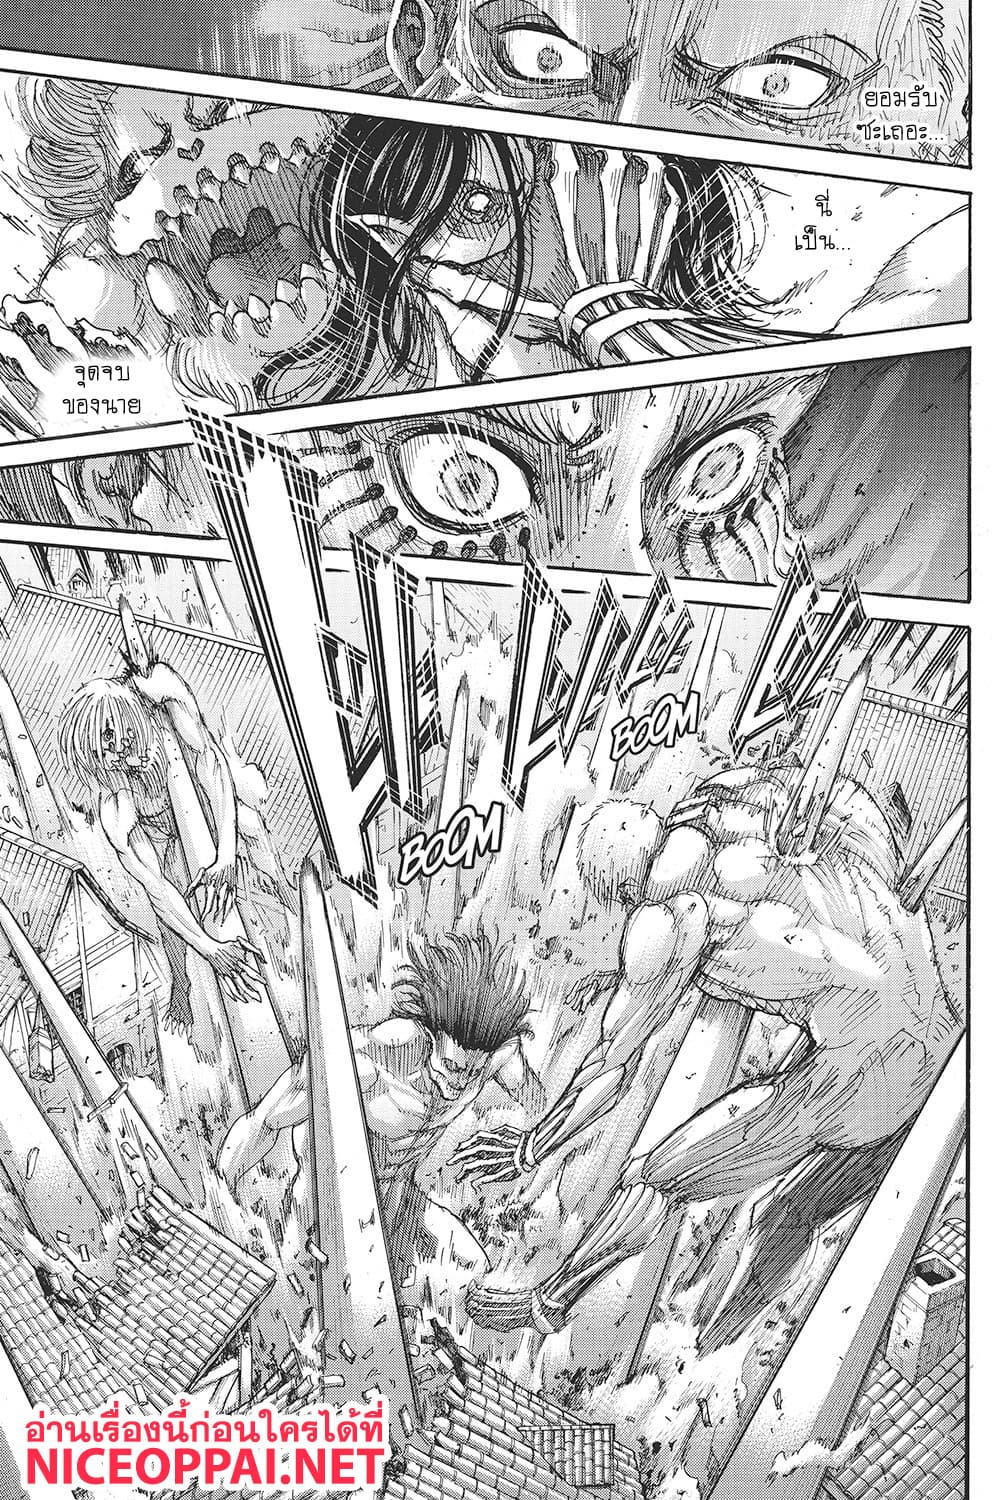 attack on titan manga 117